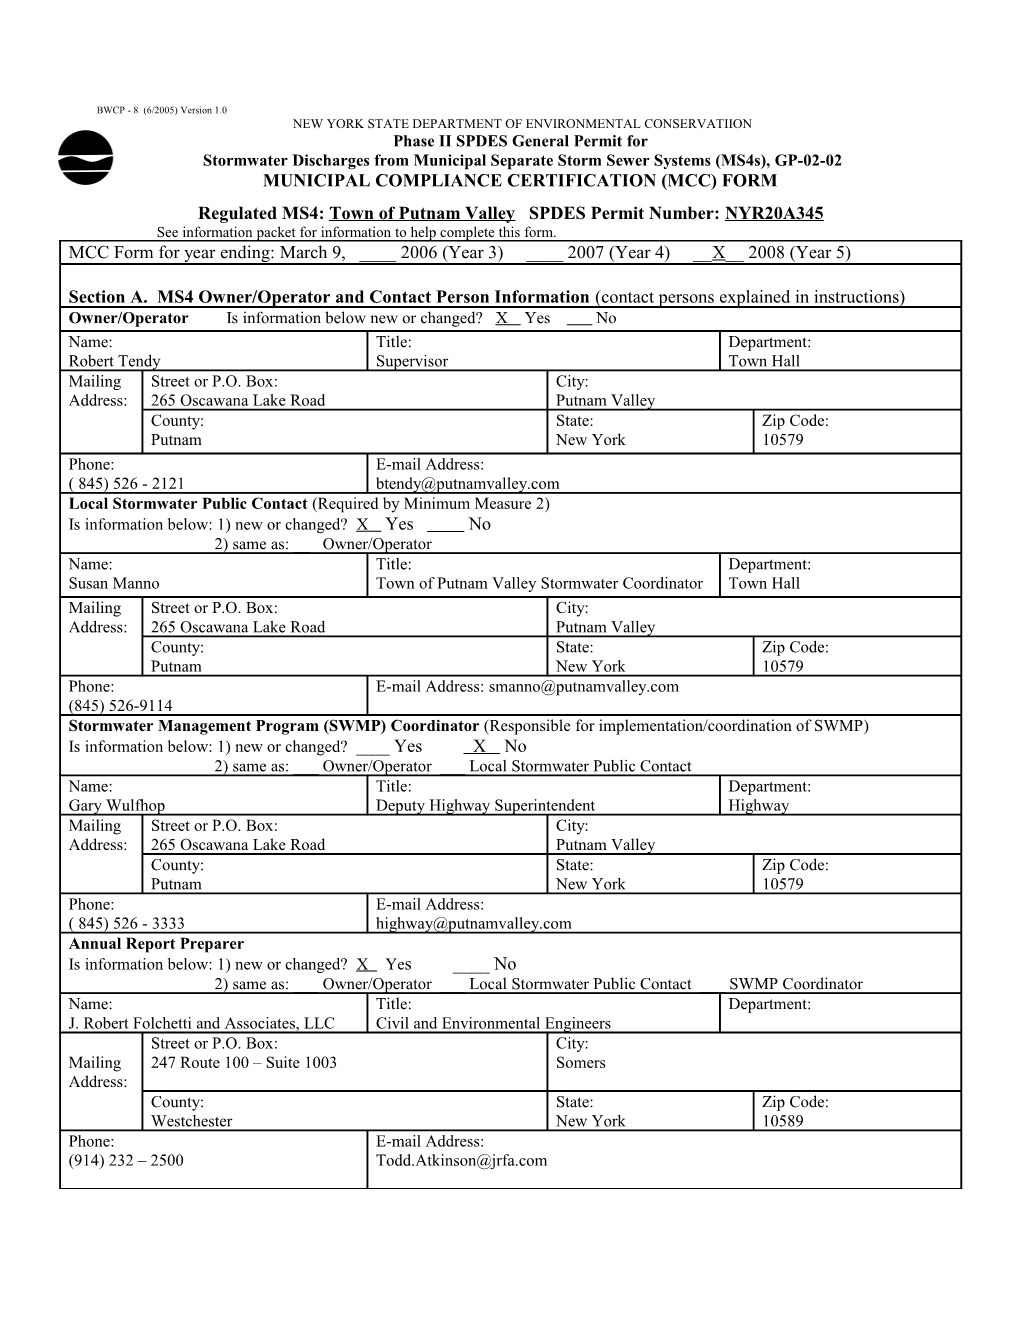 GP-02-02 Municipal Compliance Certification Form Page2